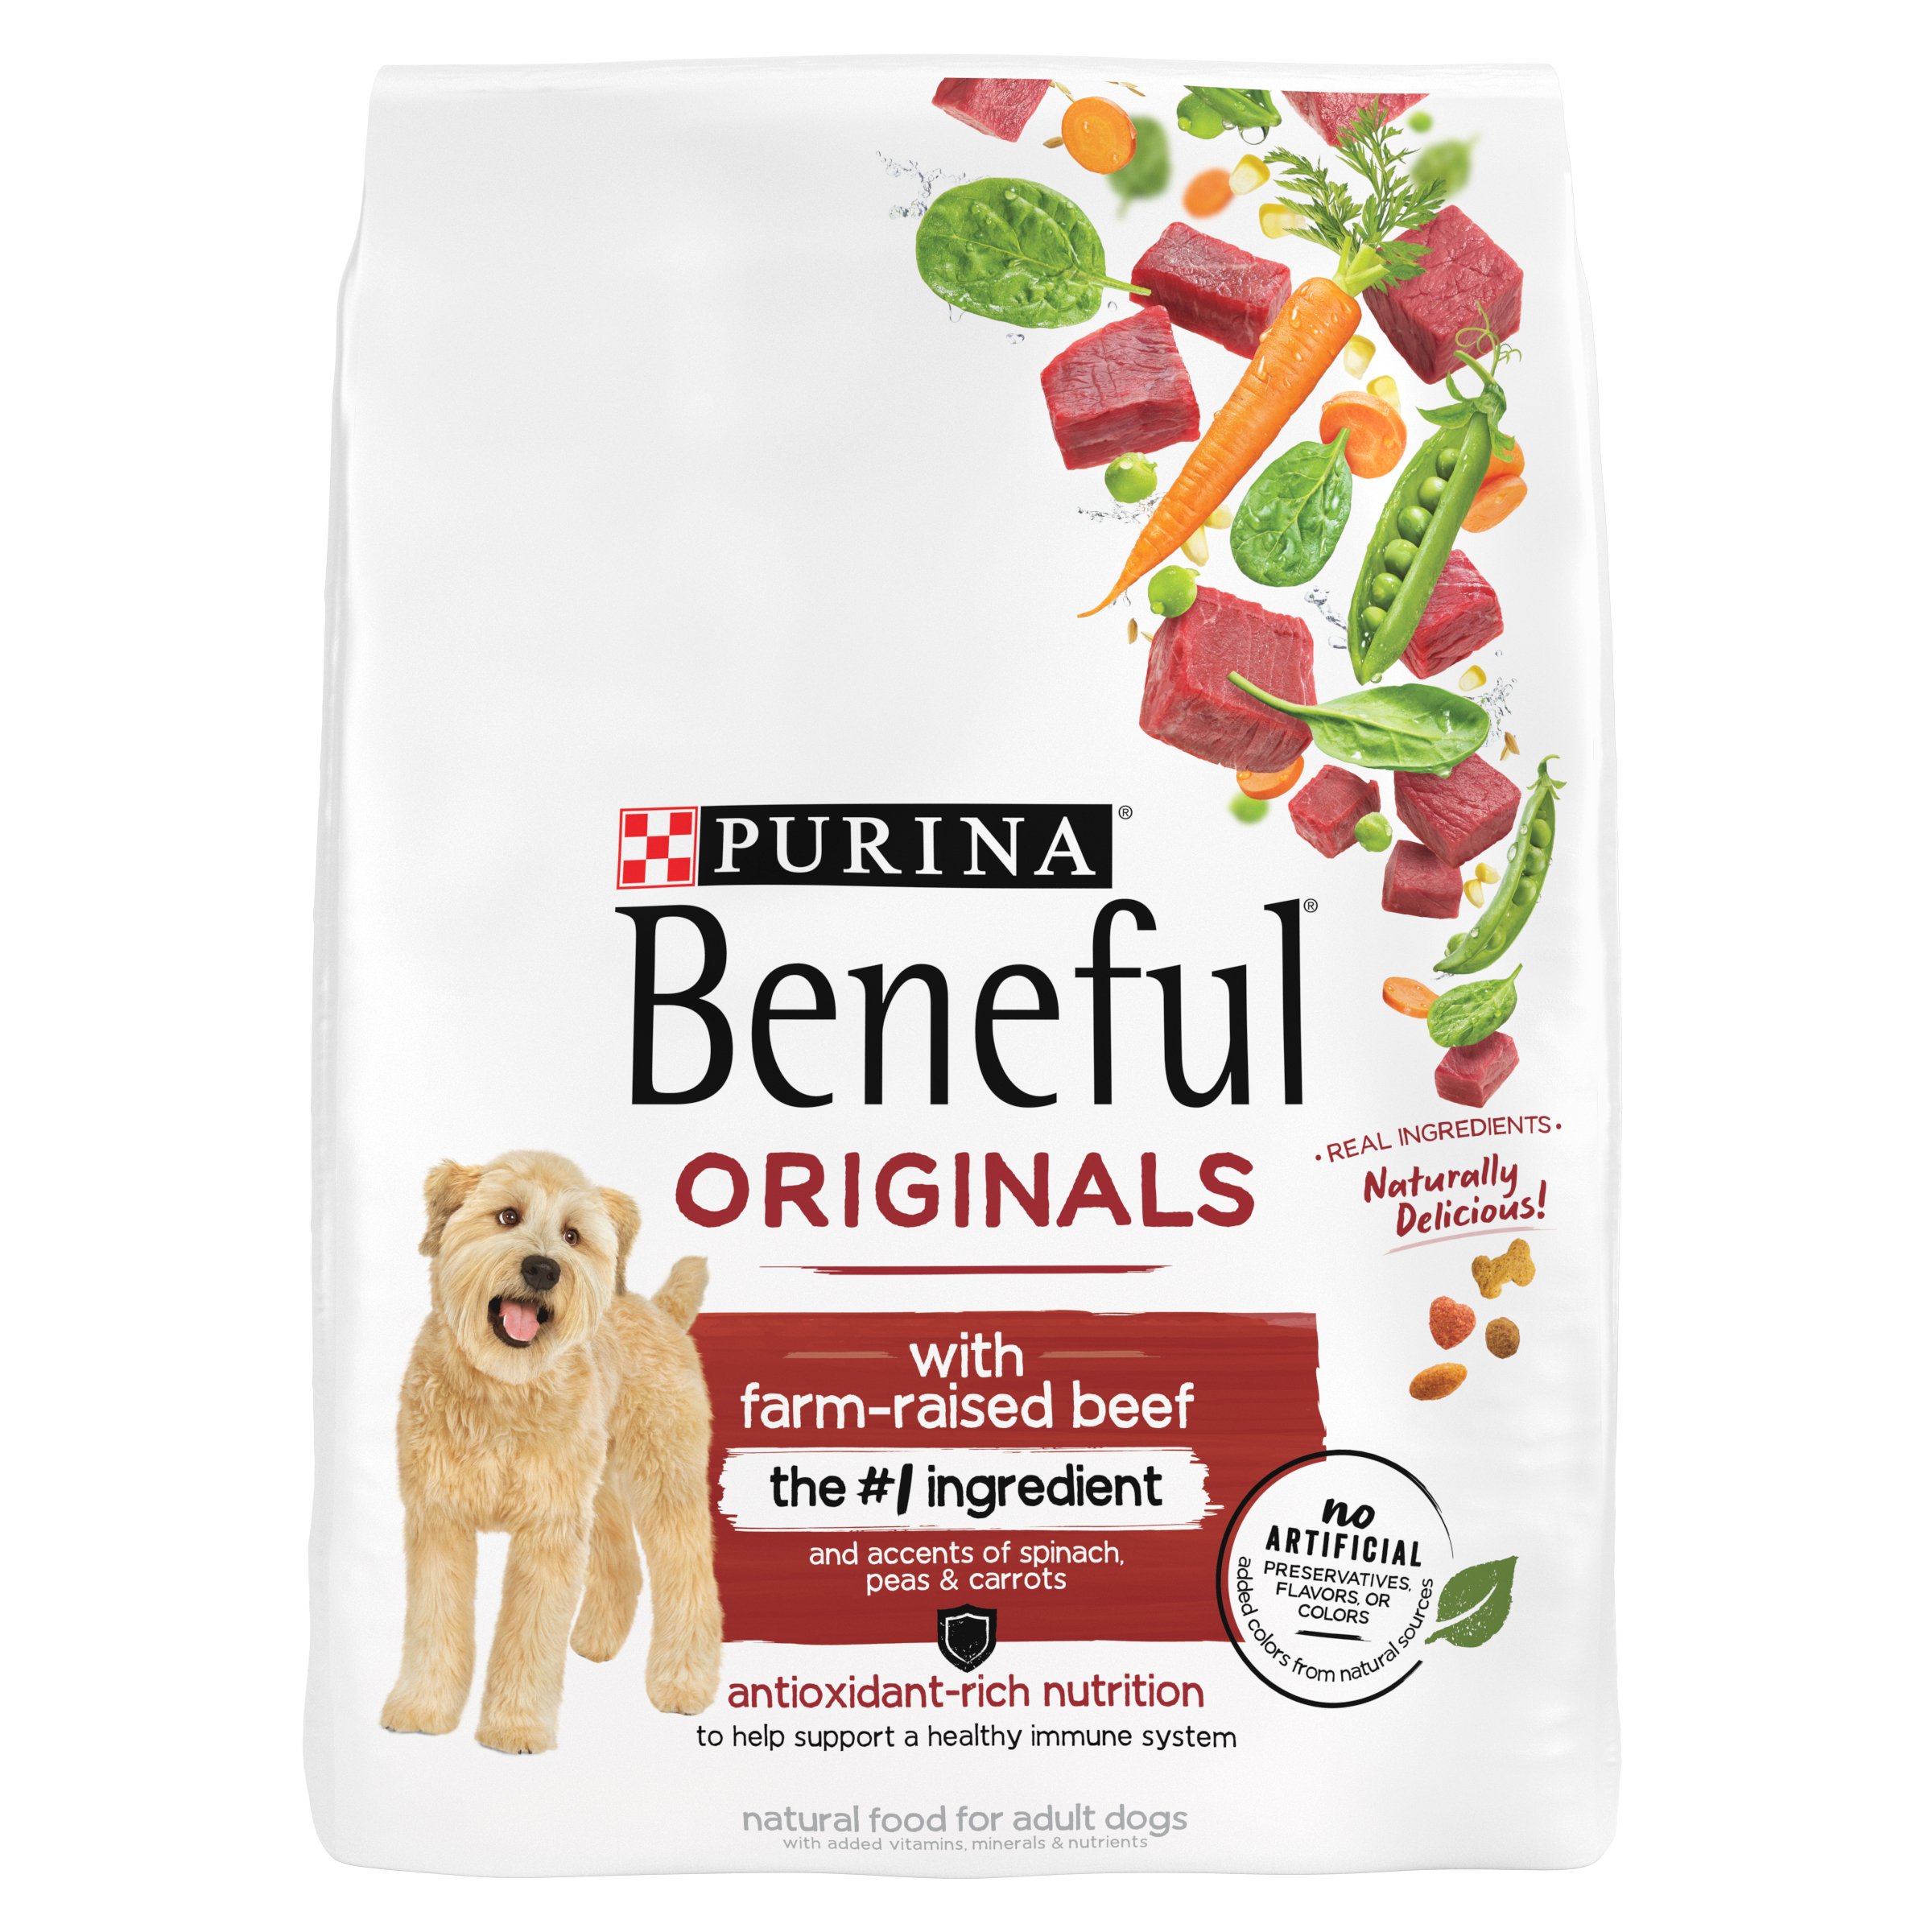 beneful dry dog food